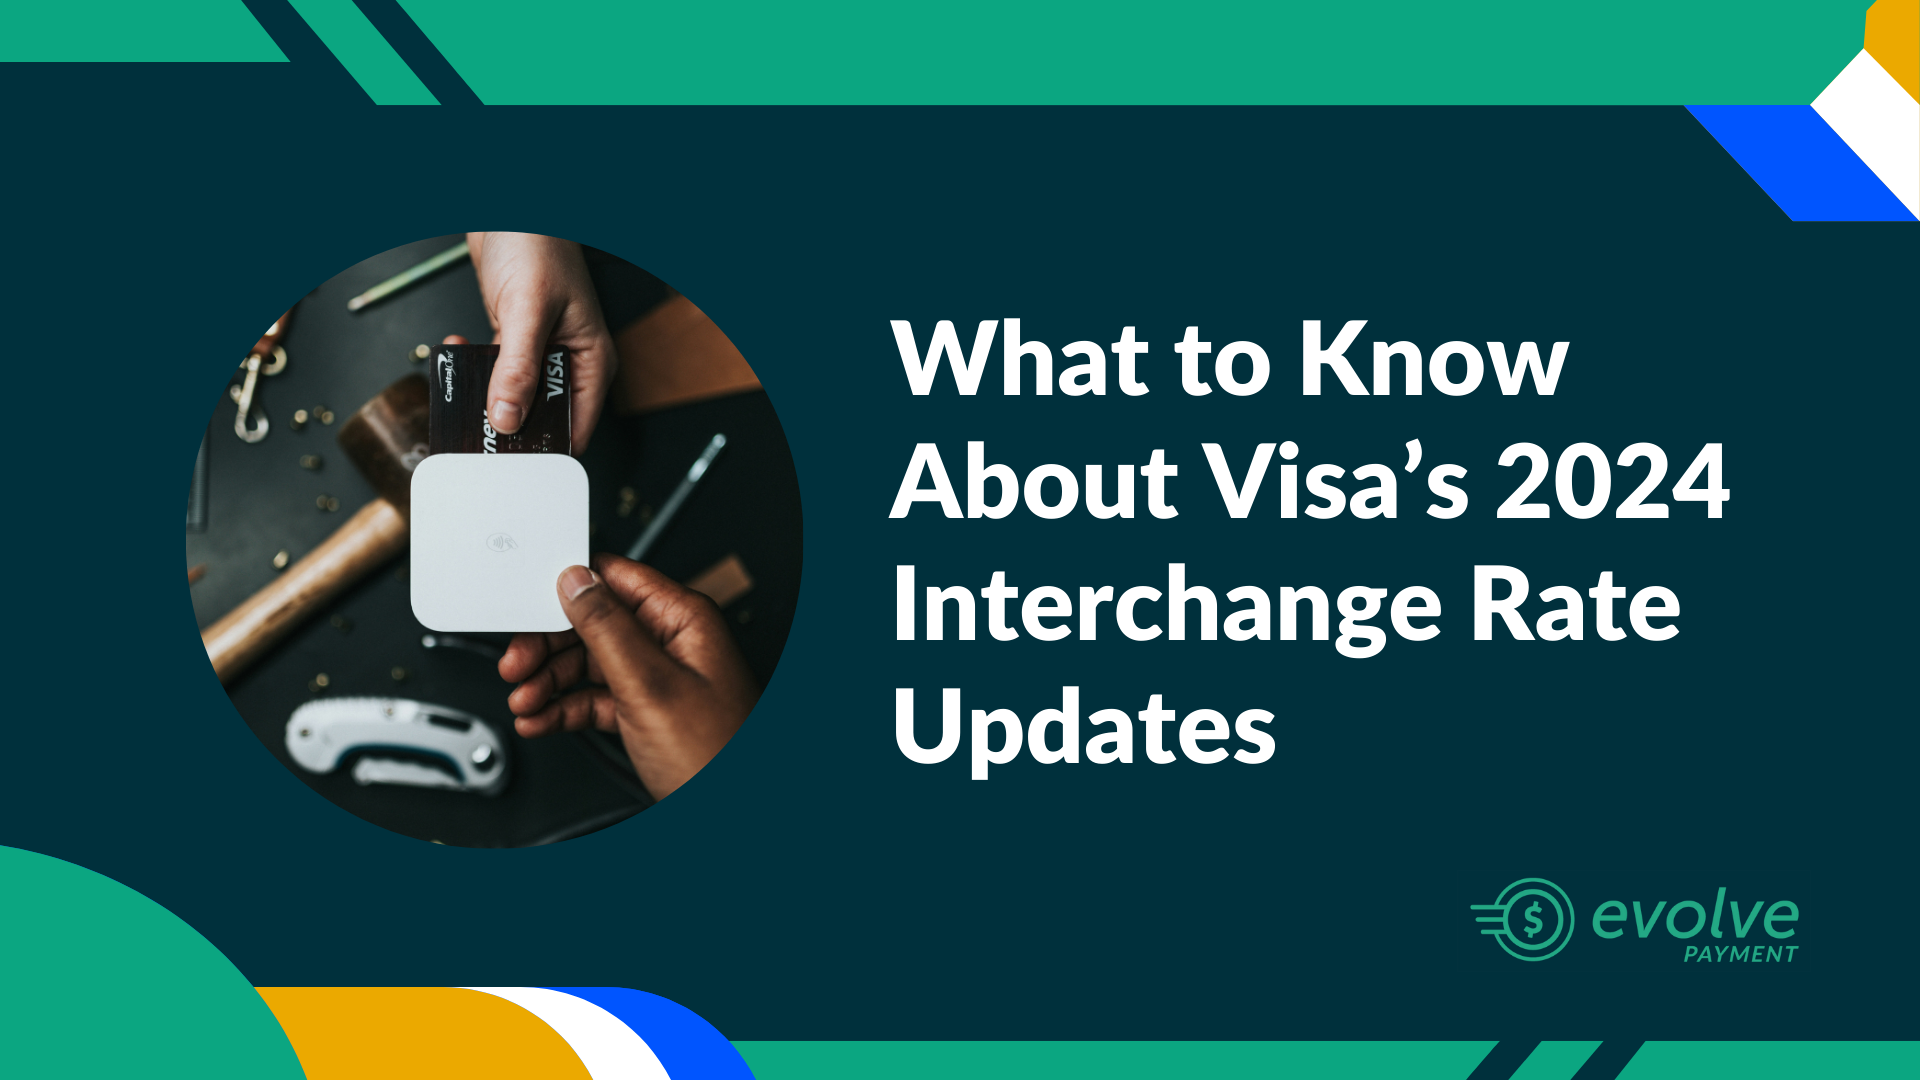 Visa 2024 Interchange Changes featured image